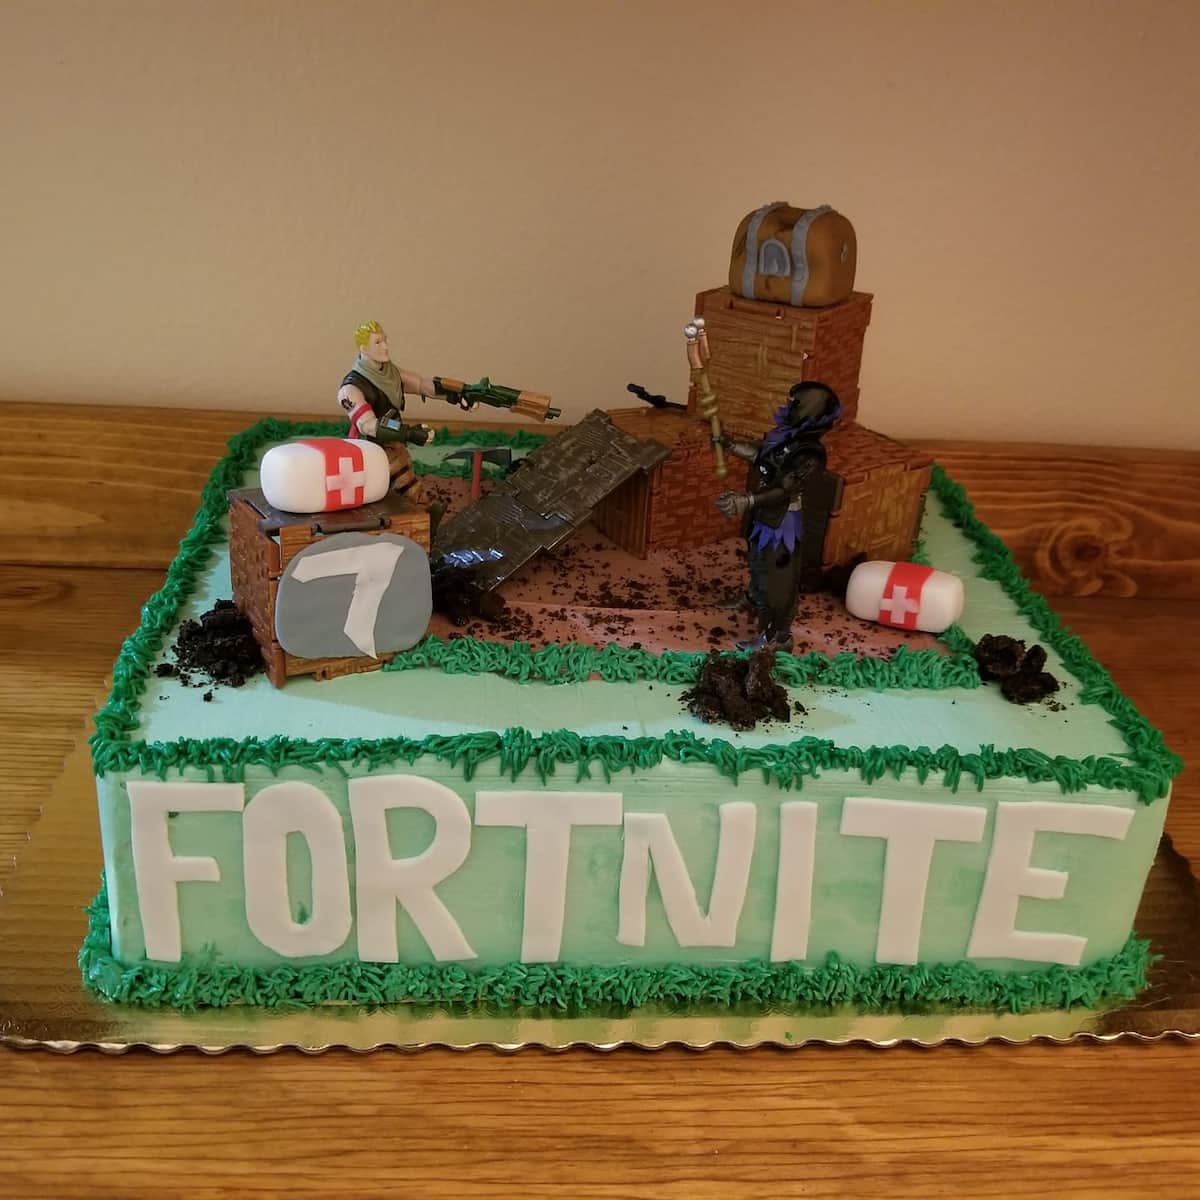 Fortnite Cake - Merciful Cakes